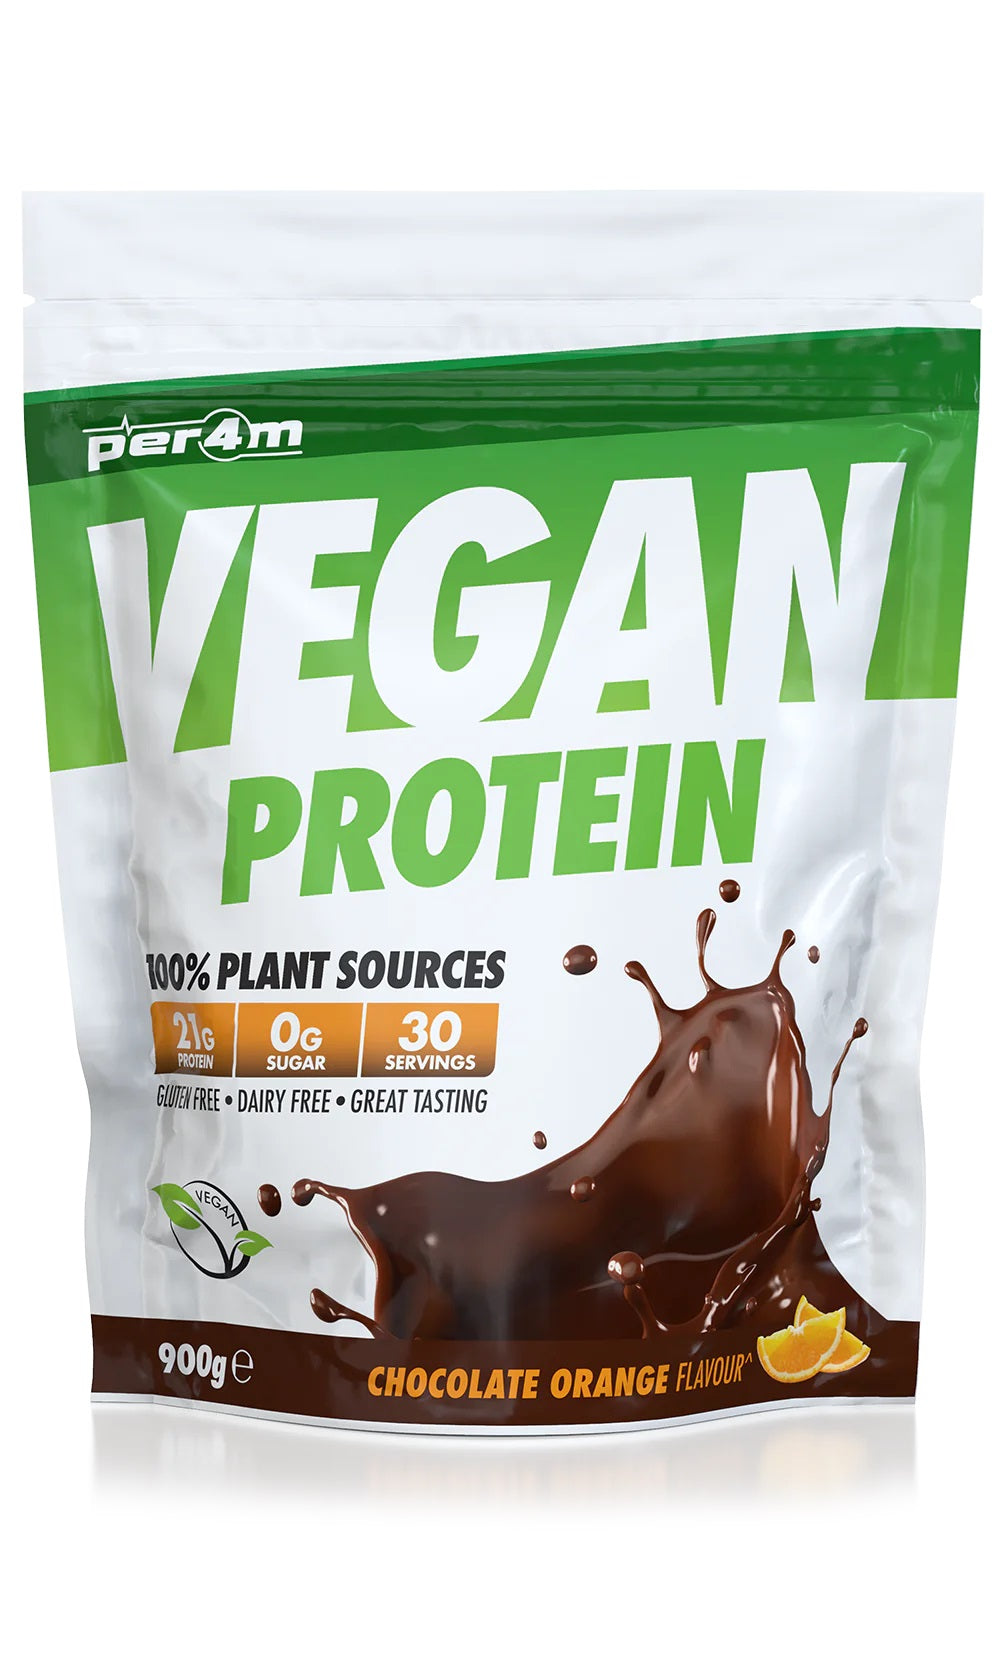 Per4m Vegan Protein Powder